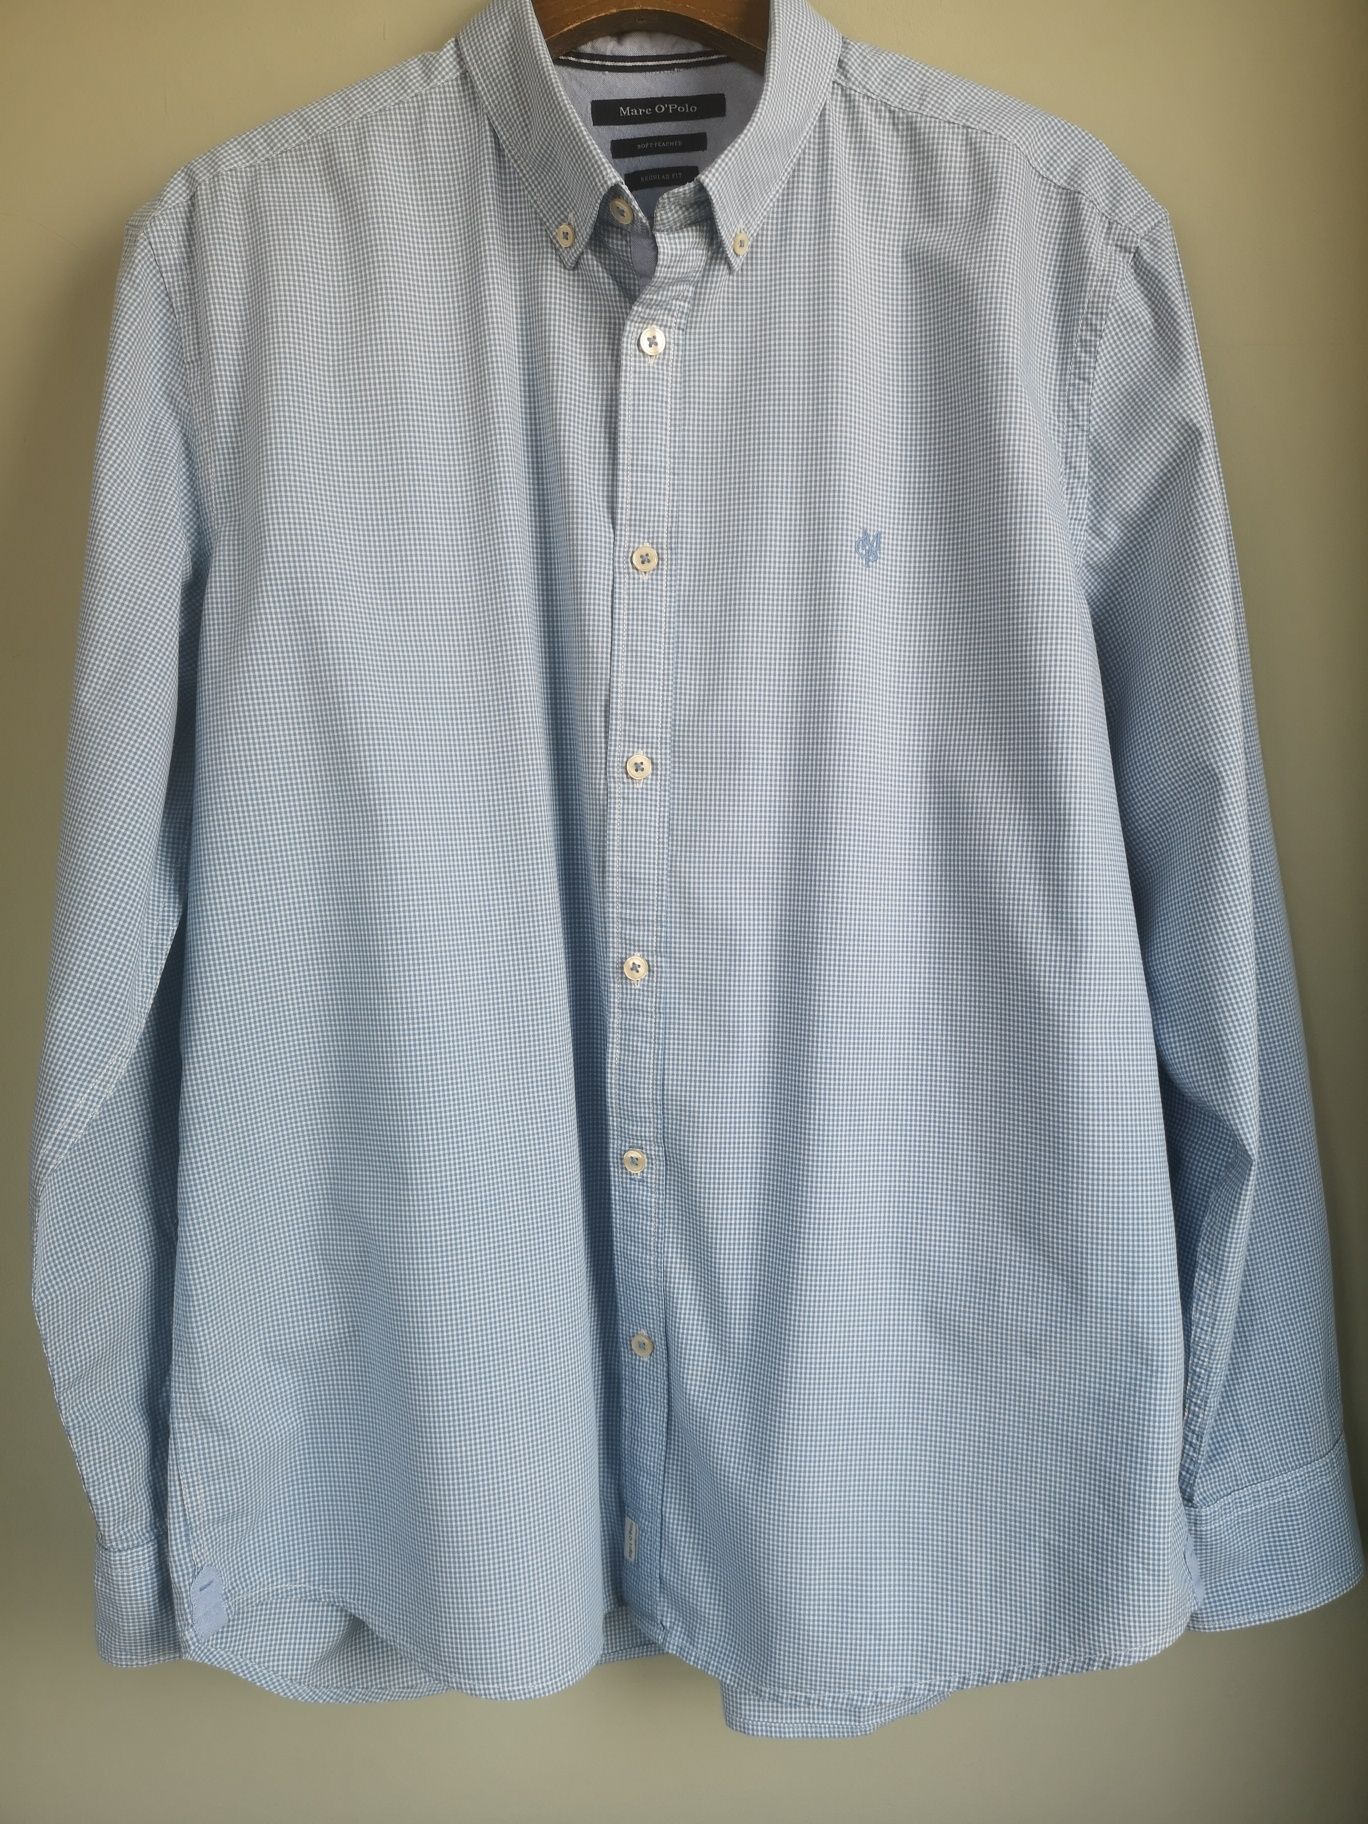 MARC O'POLO, памучна риза, размер XL